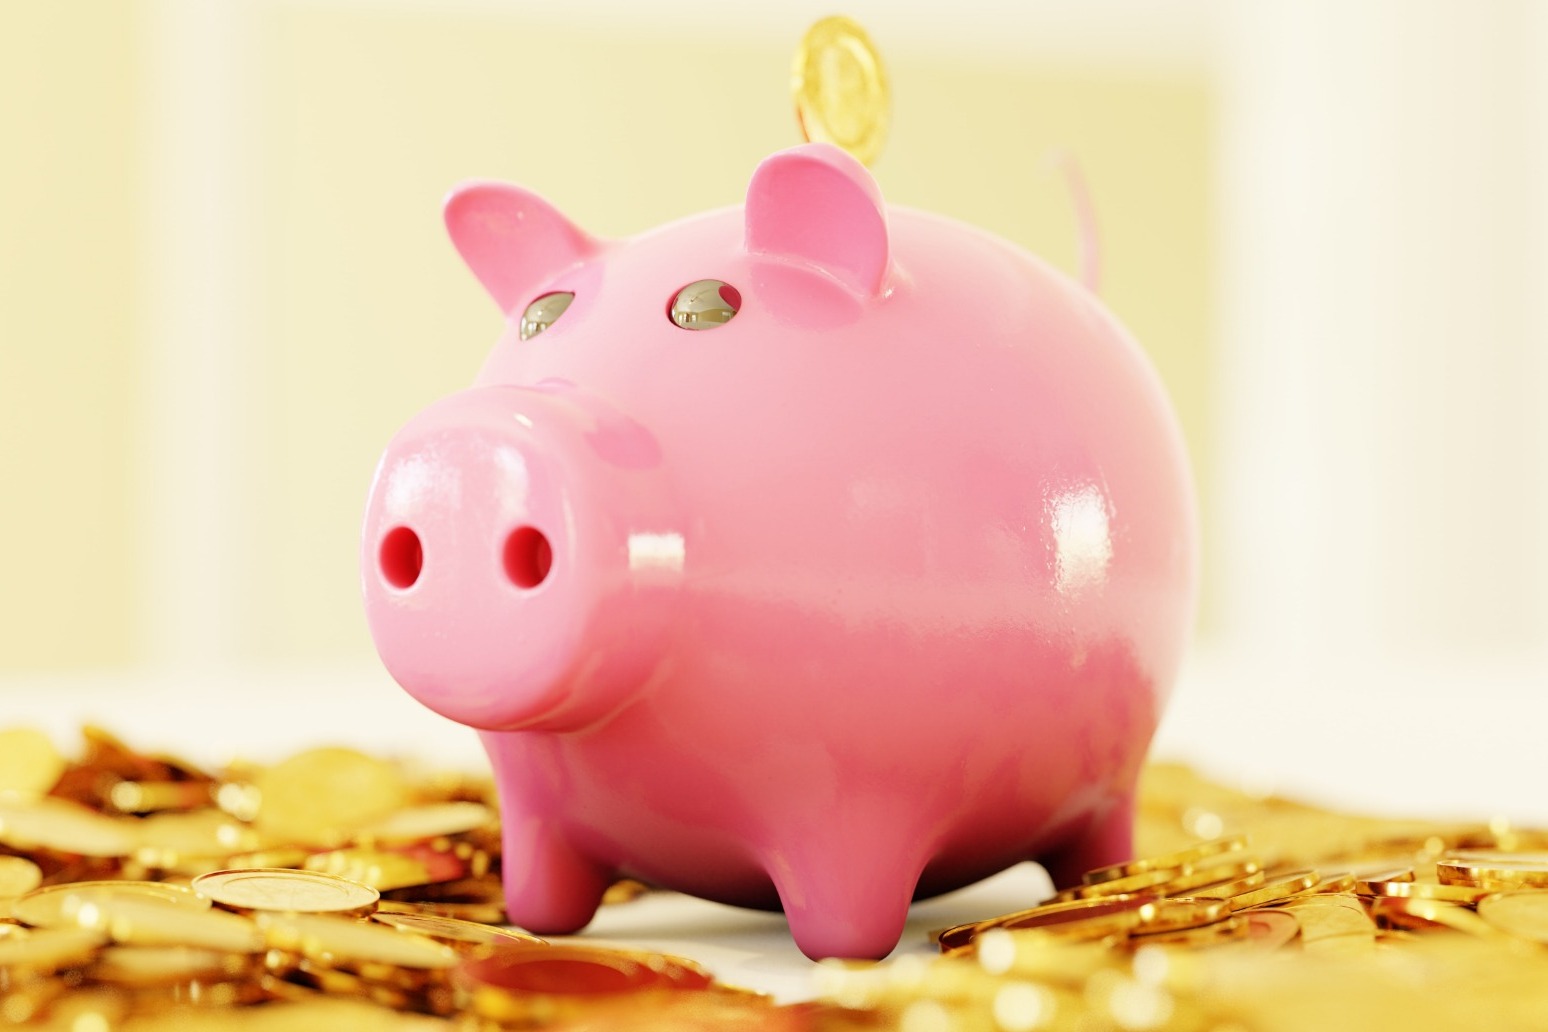 New regular savings account offers 2% interest 